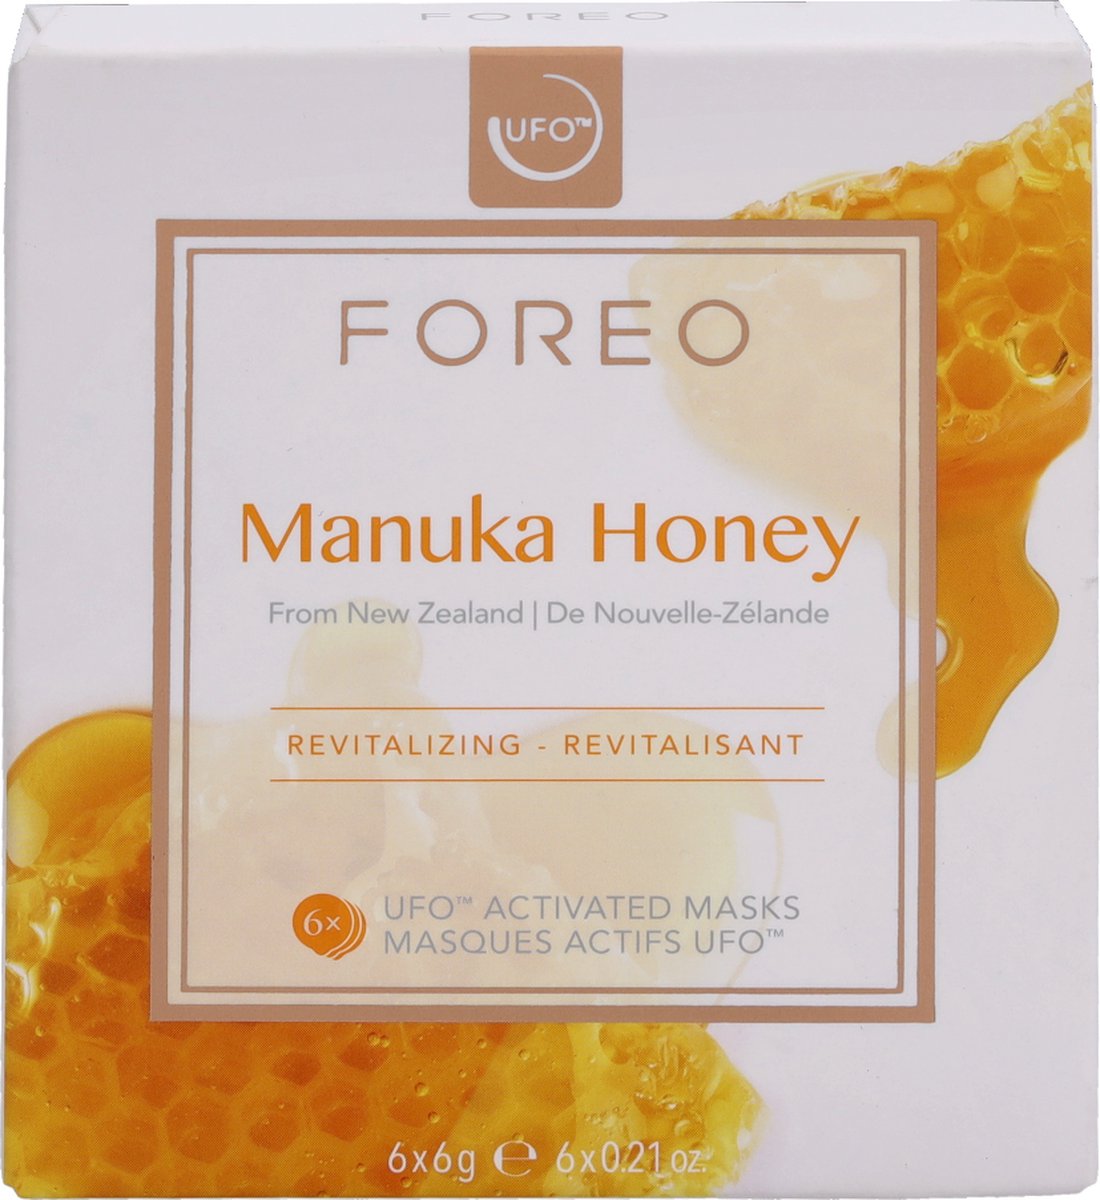 FOREO – Gezichtsmasker Manuka Honey voor UFO™ | bol